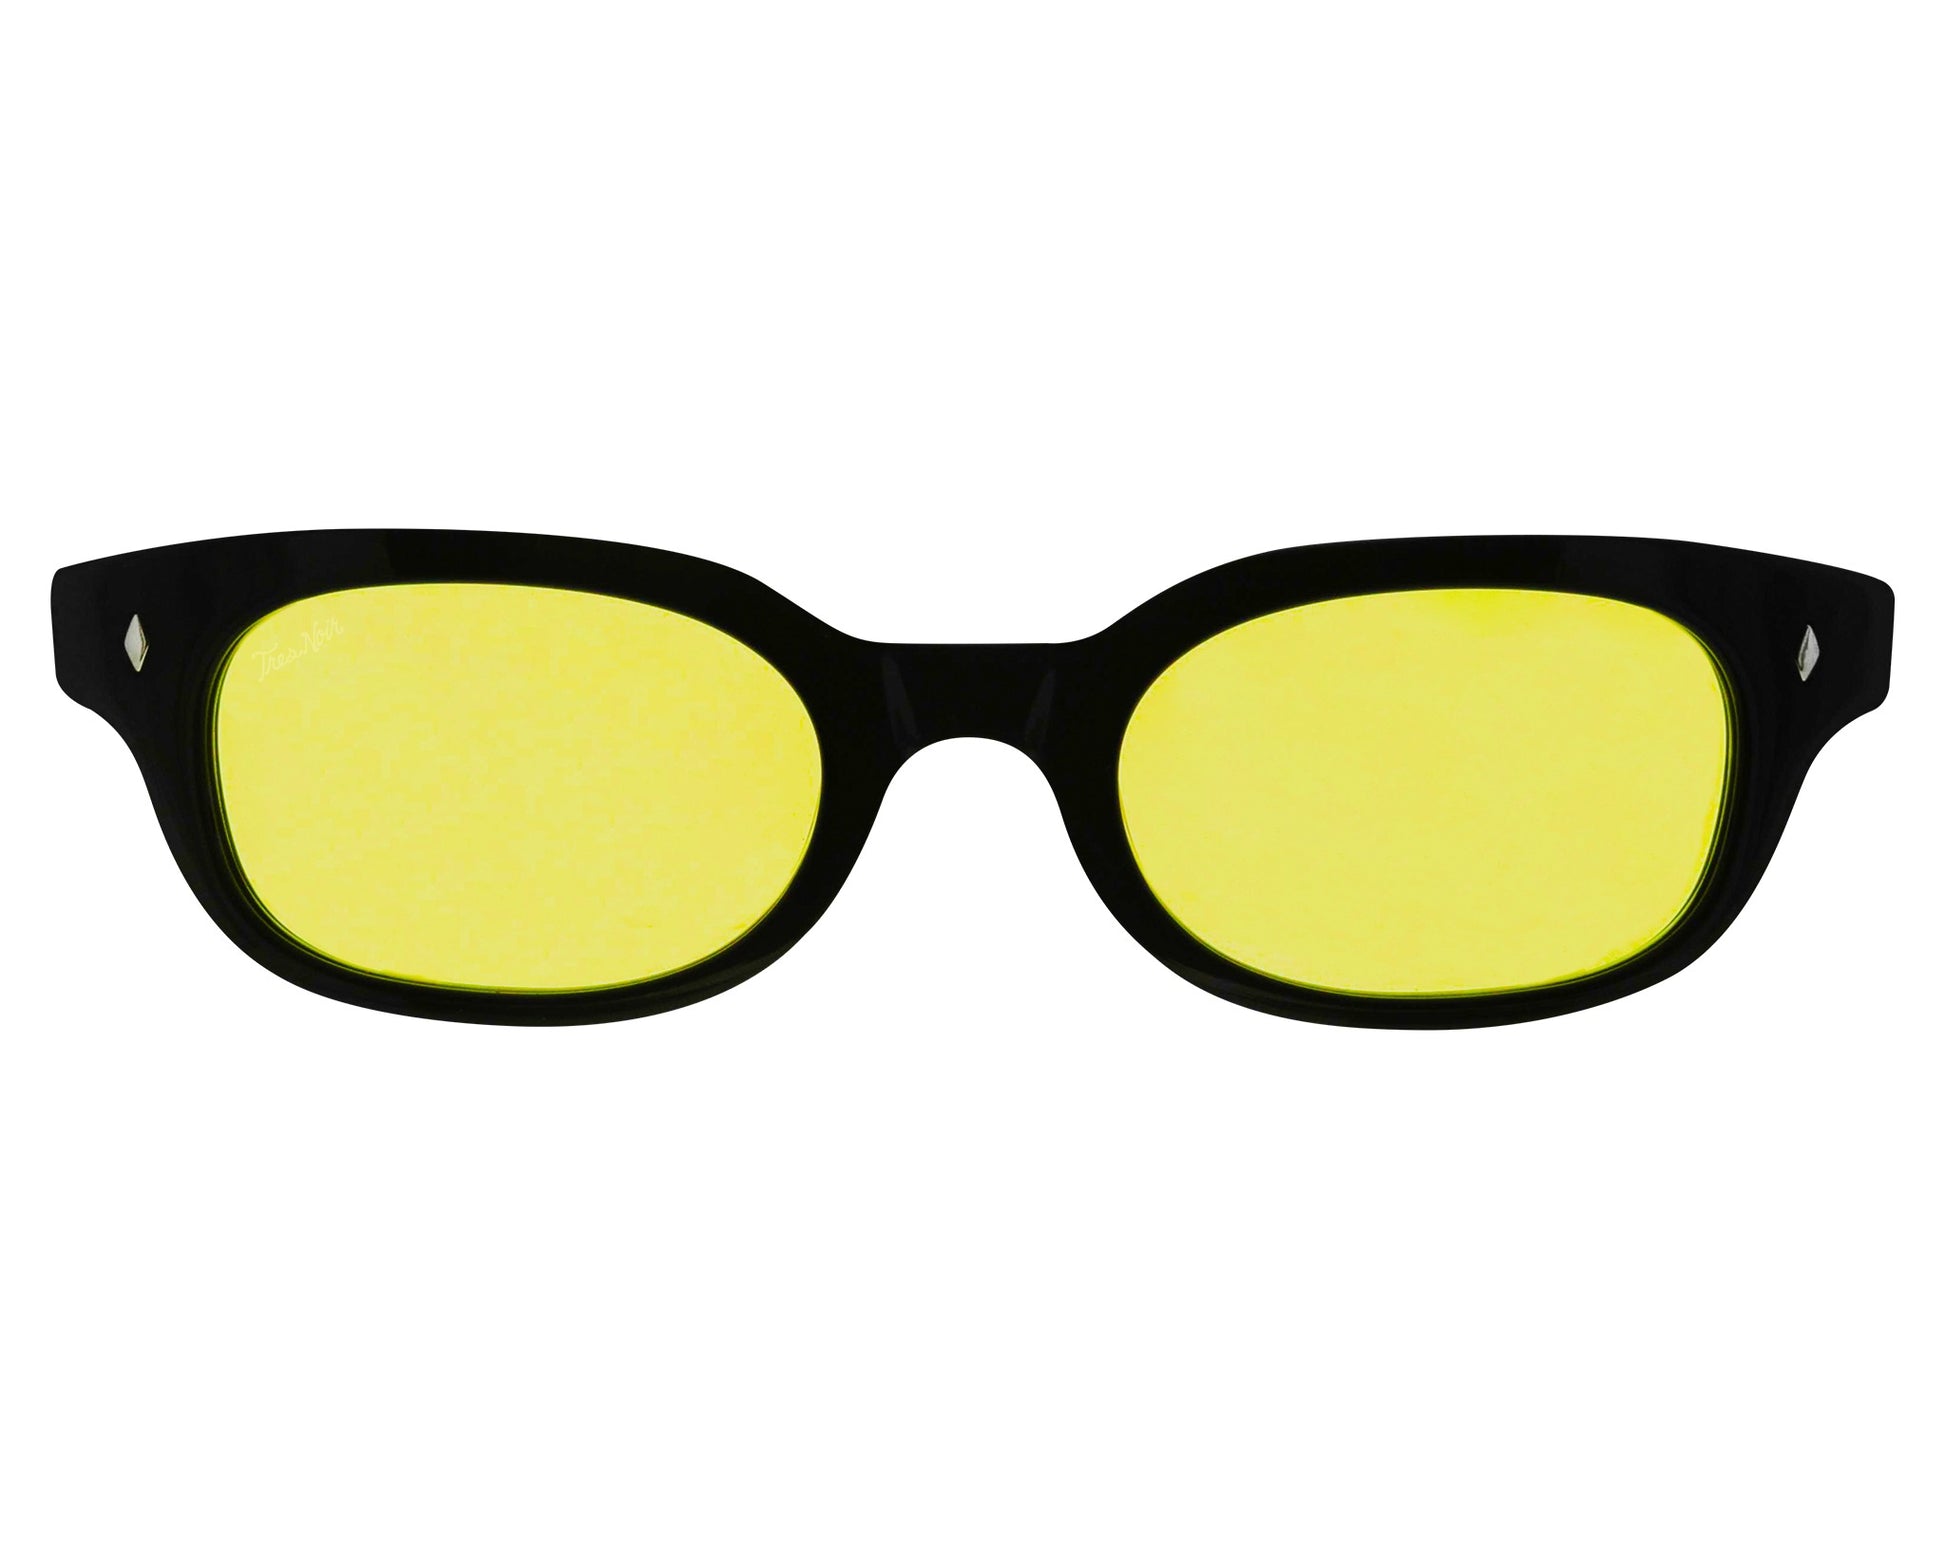 TN's - Black - Yellow Lens - front